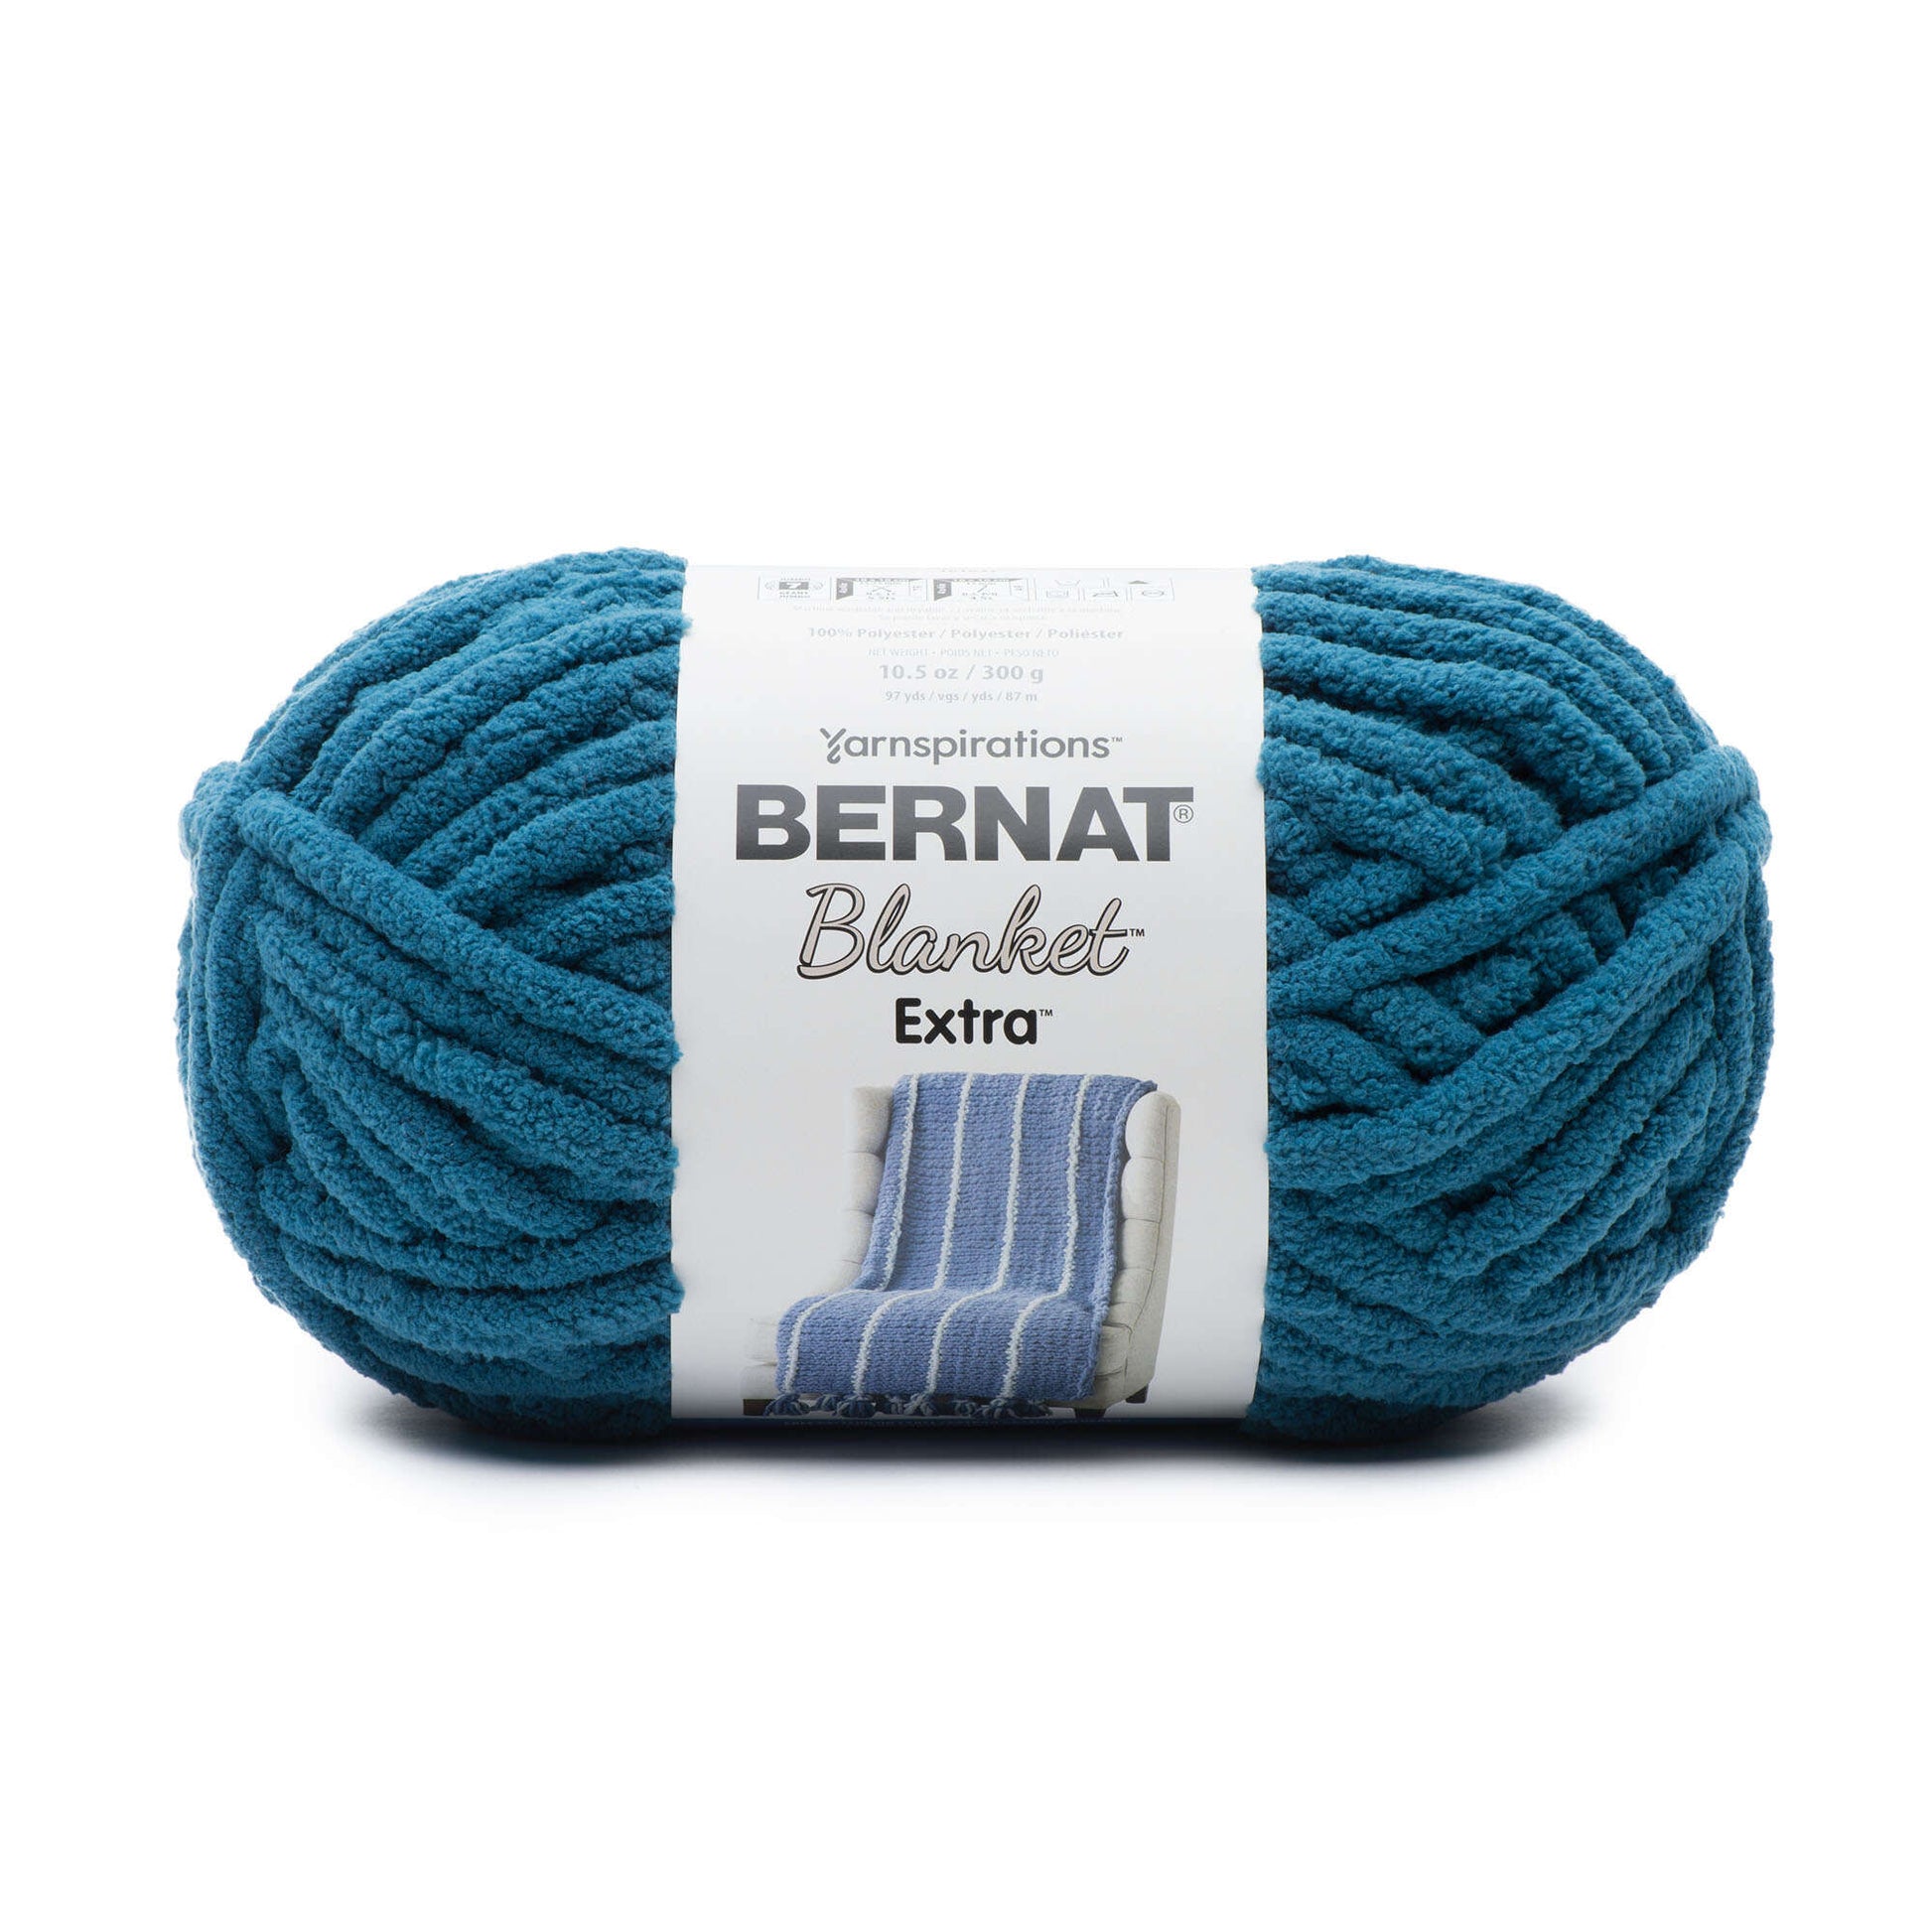 Bernat Blanket Extra Yarn (300g/10.5oz)